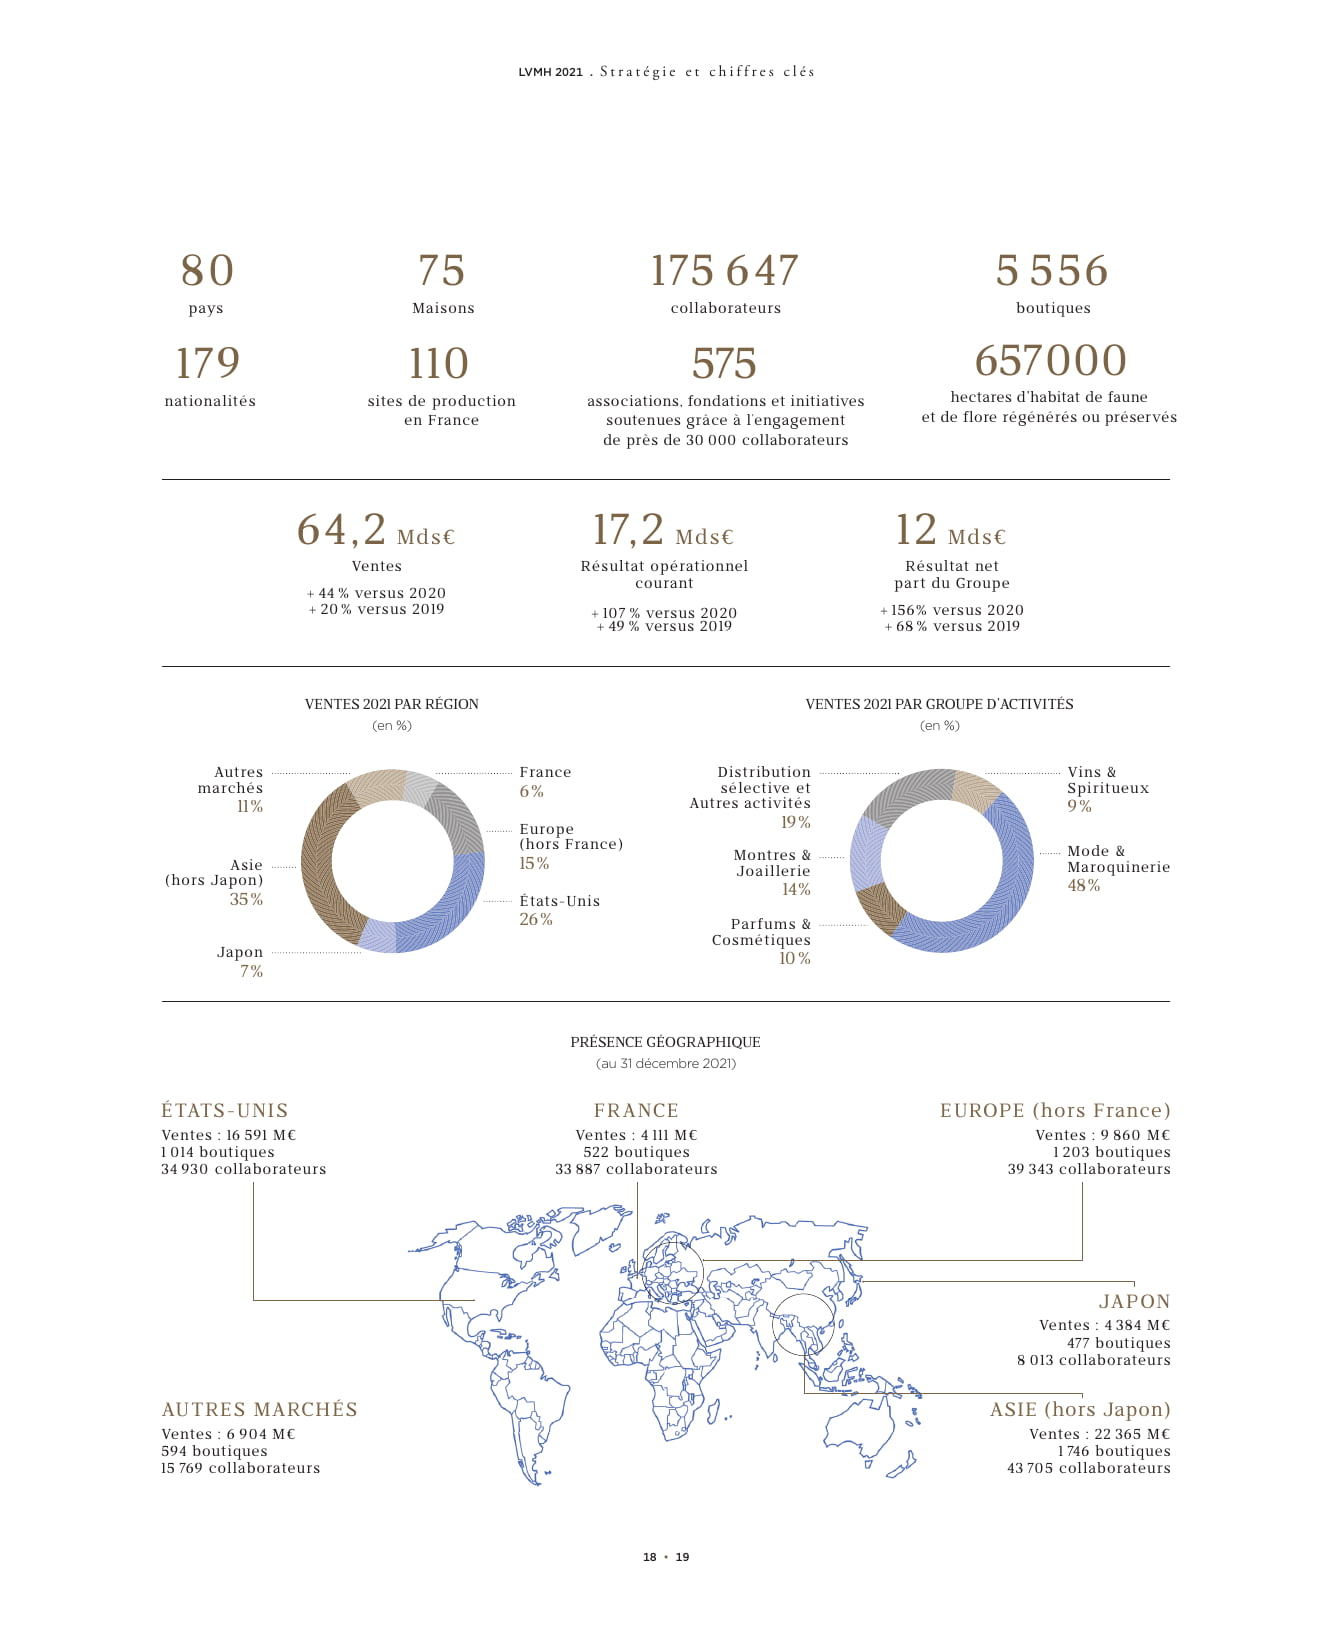 Rapport annuel interactif 2021 - LVMH